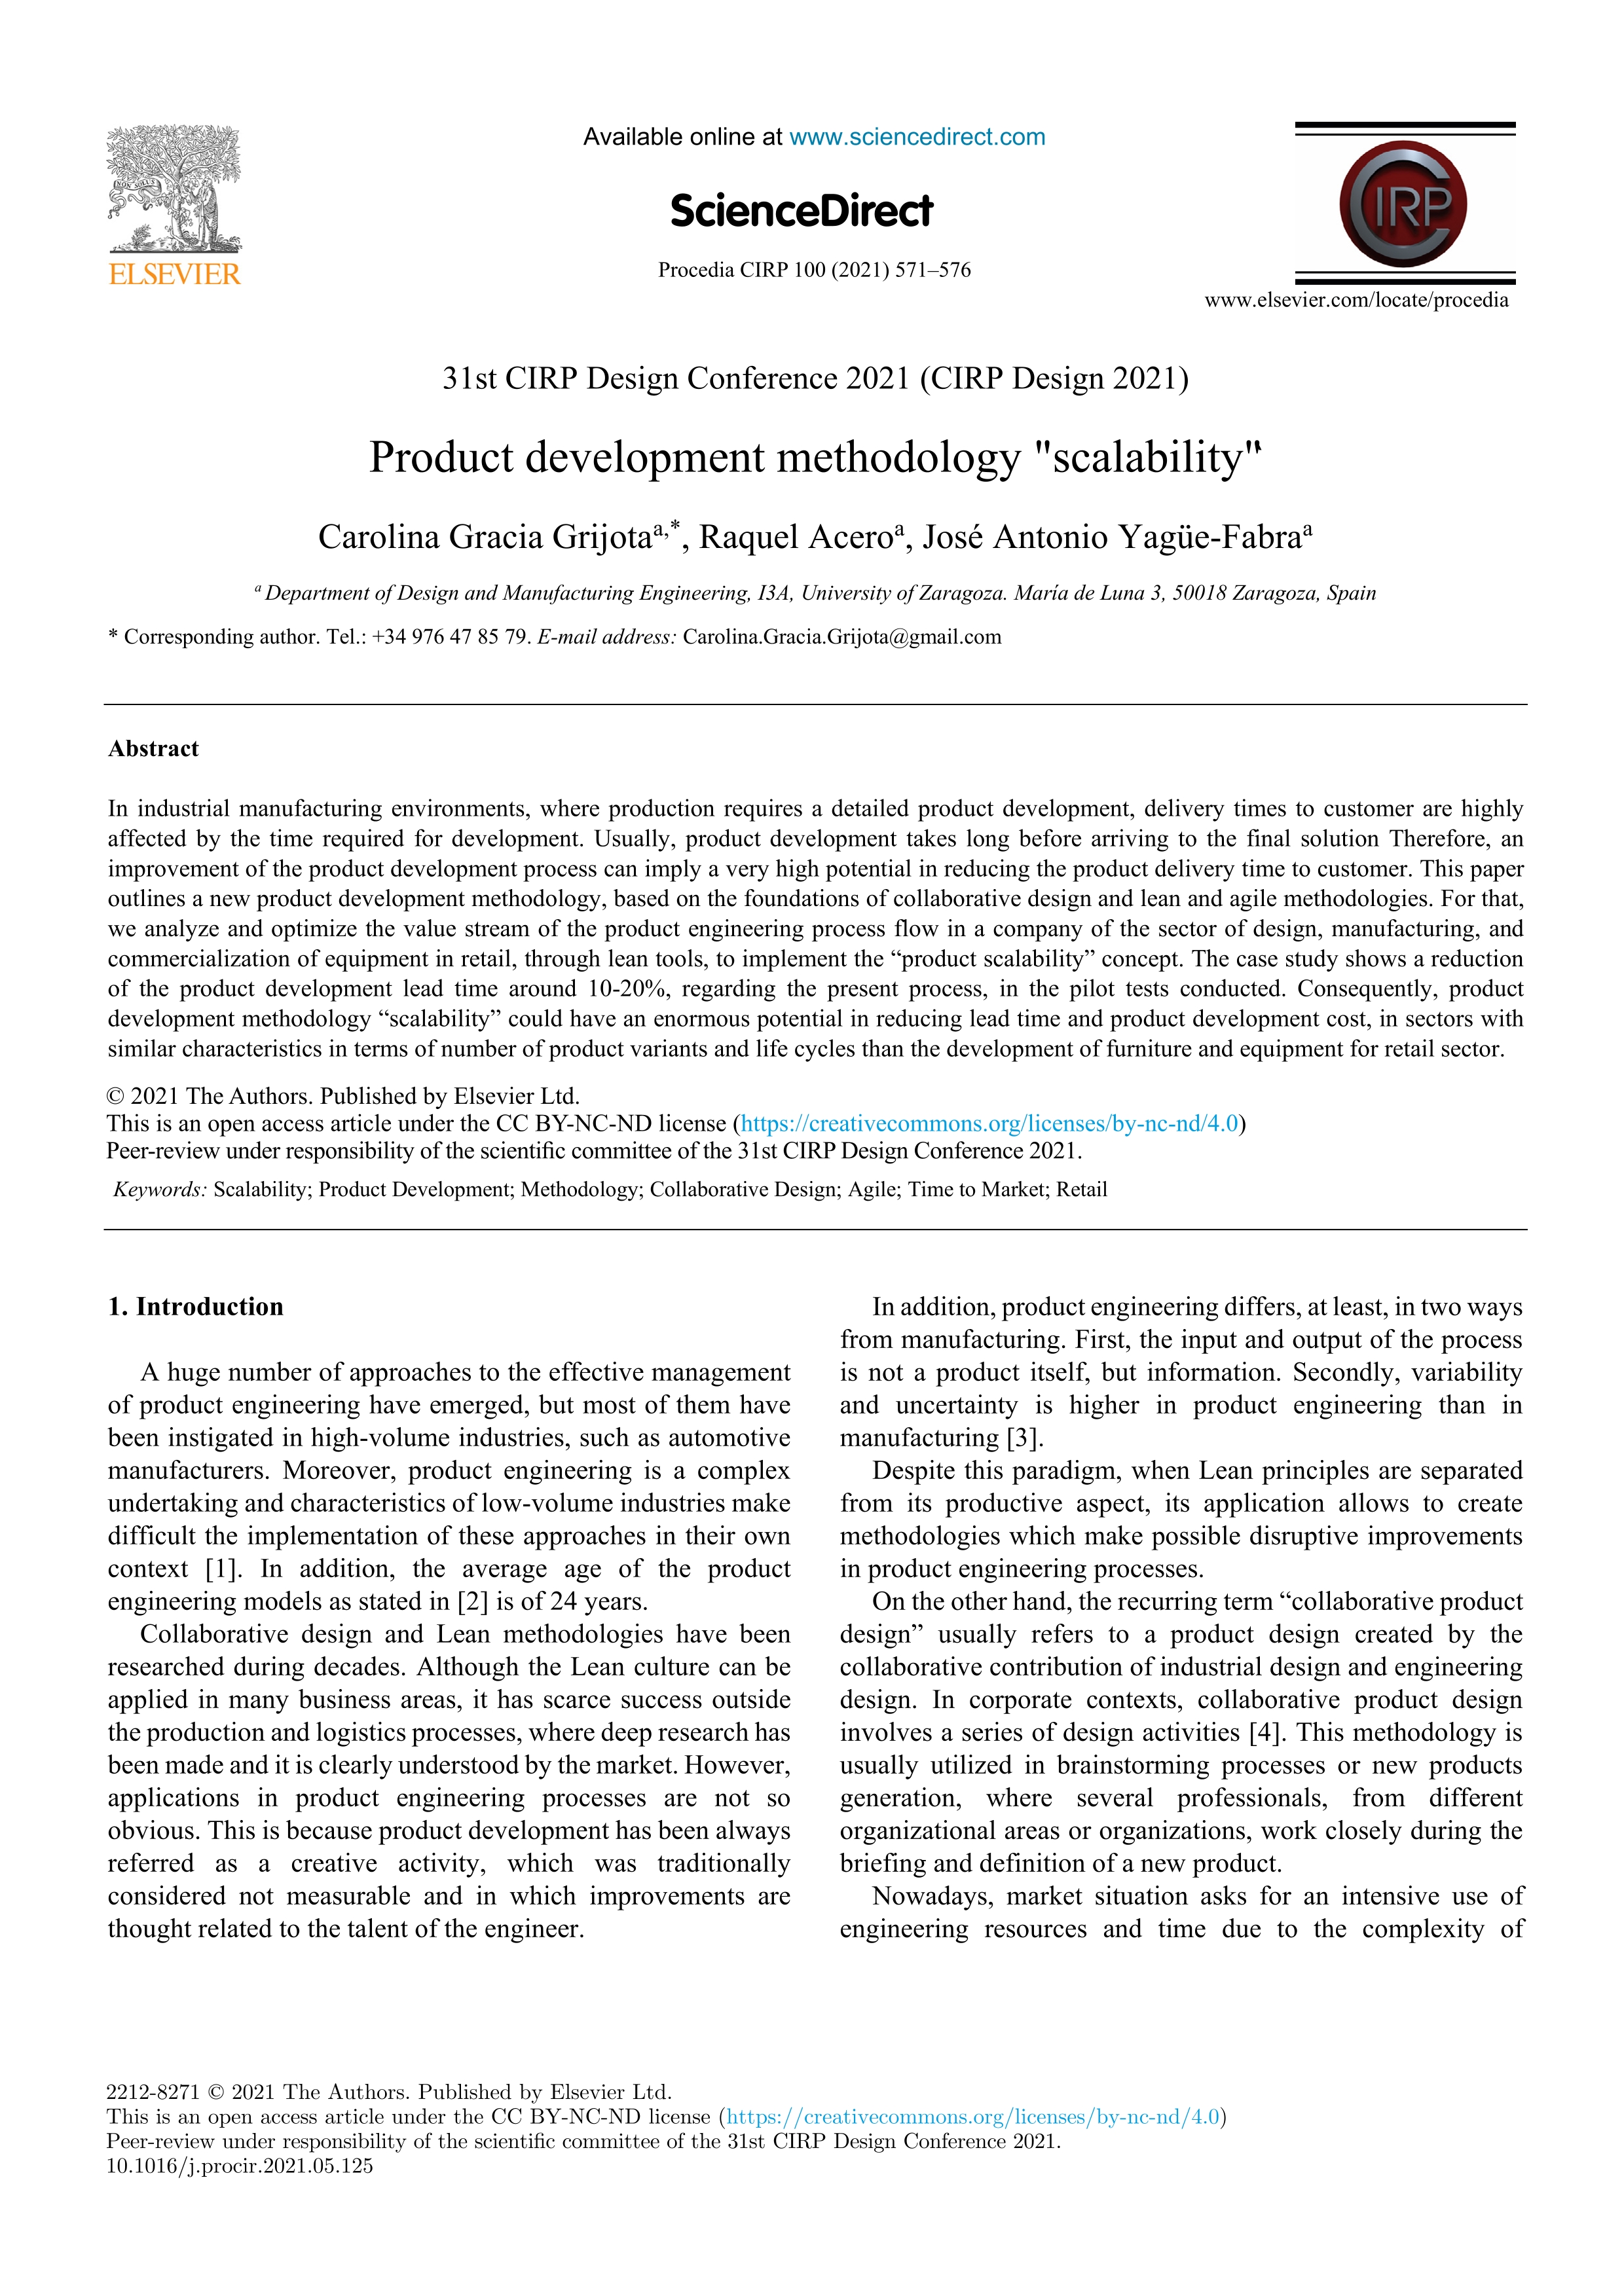 Product development methodology 